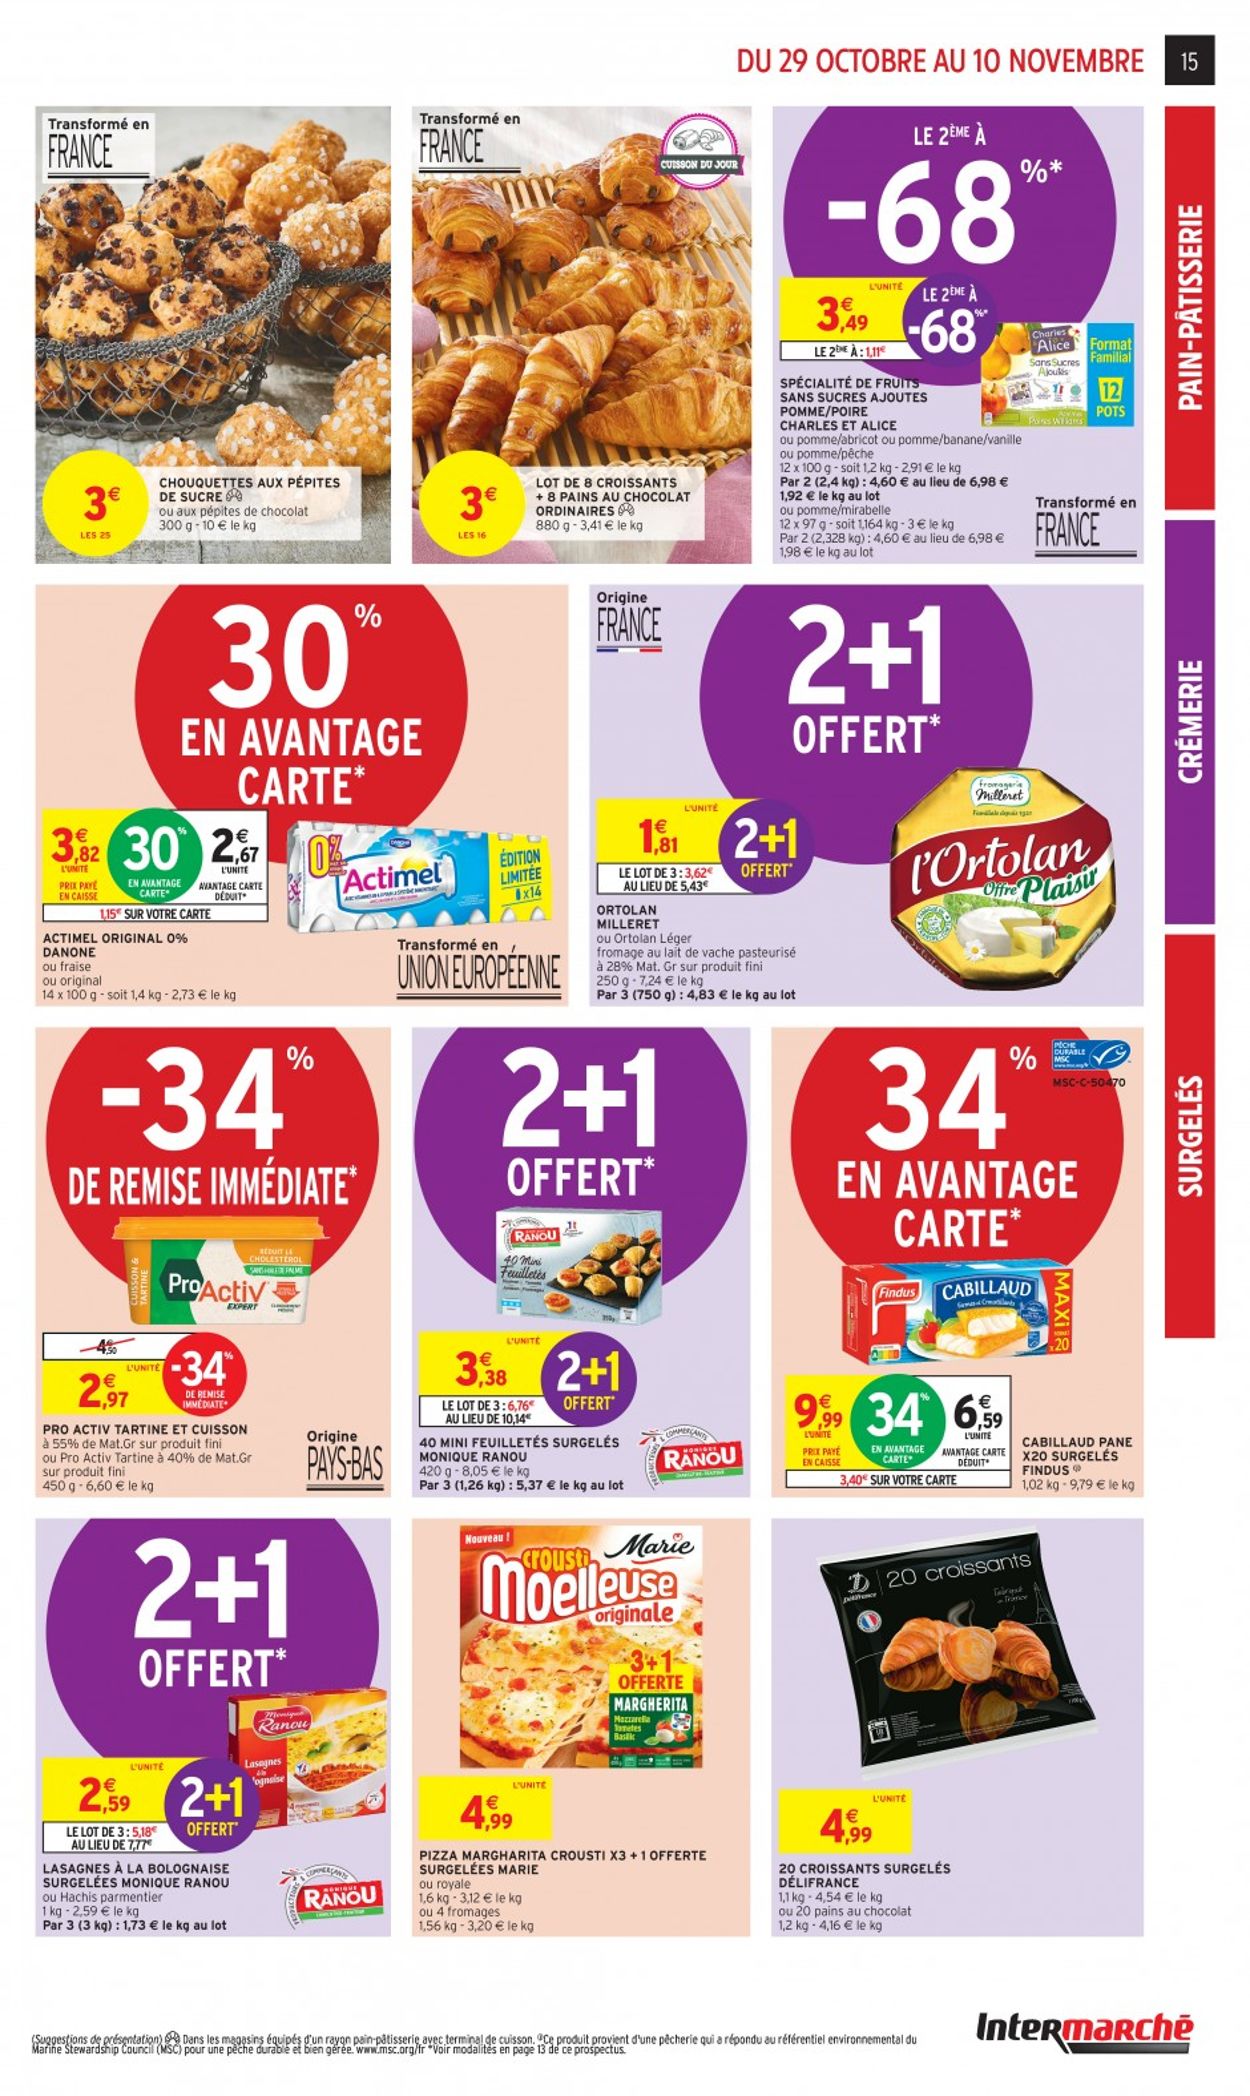 Intermarché Catalogue - 29.10-10.11.2019 (Page 15)